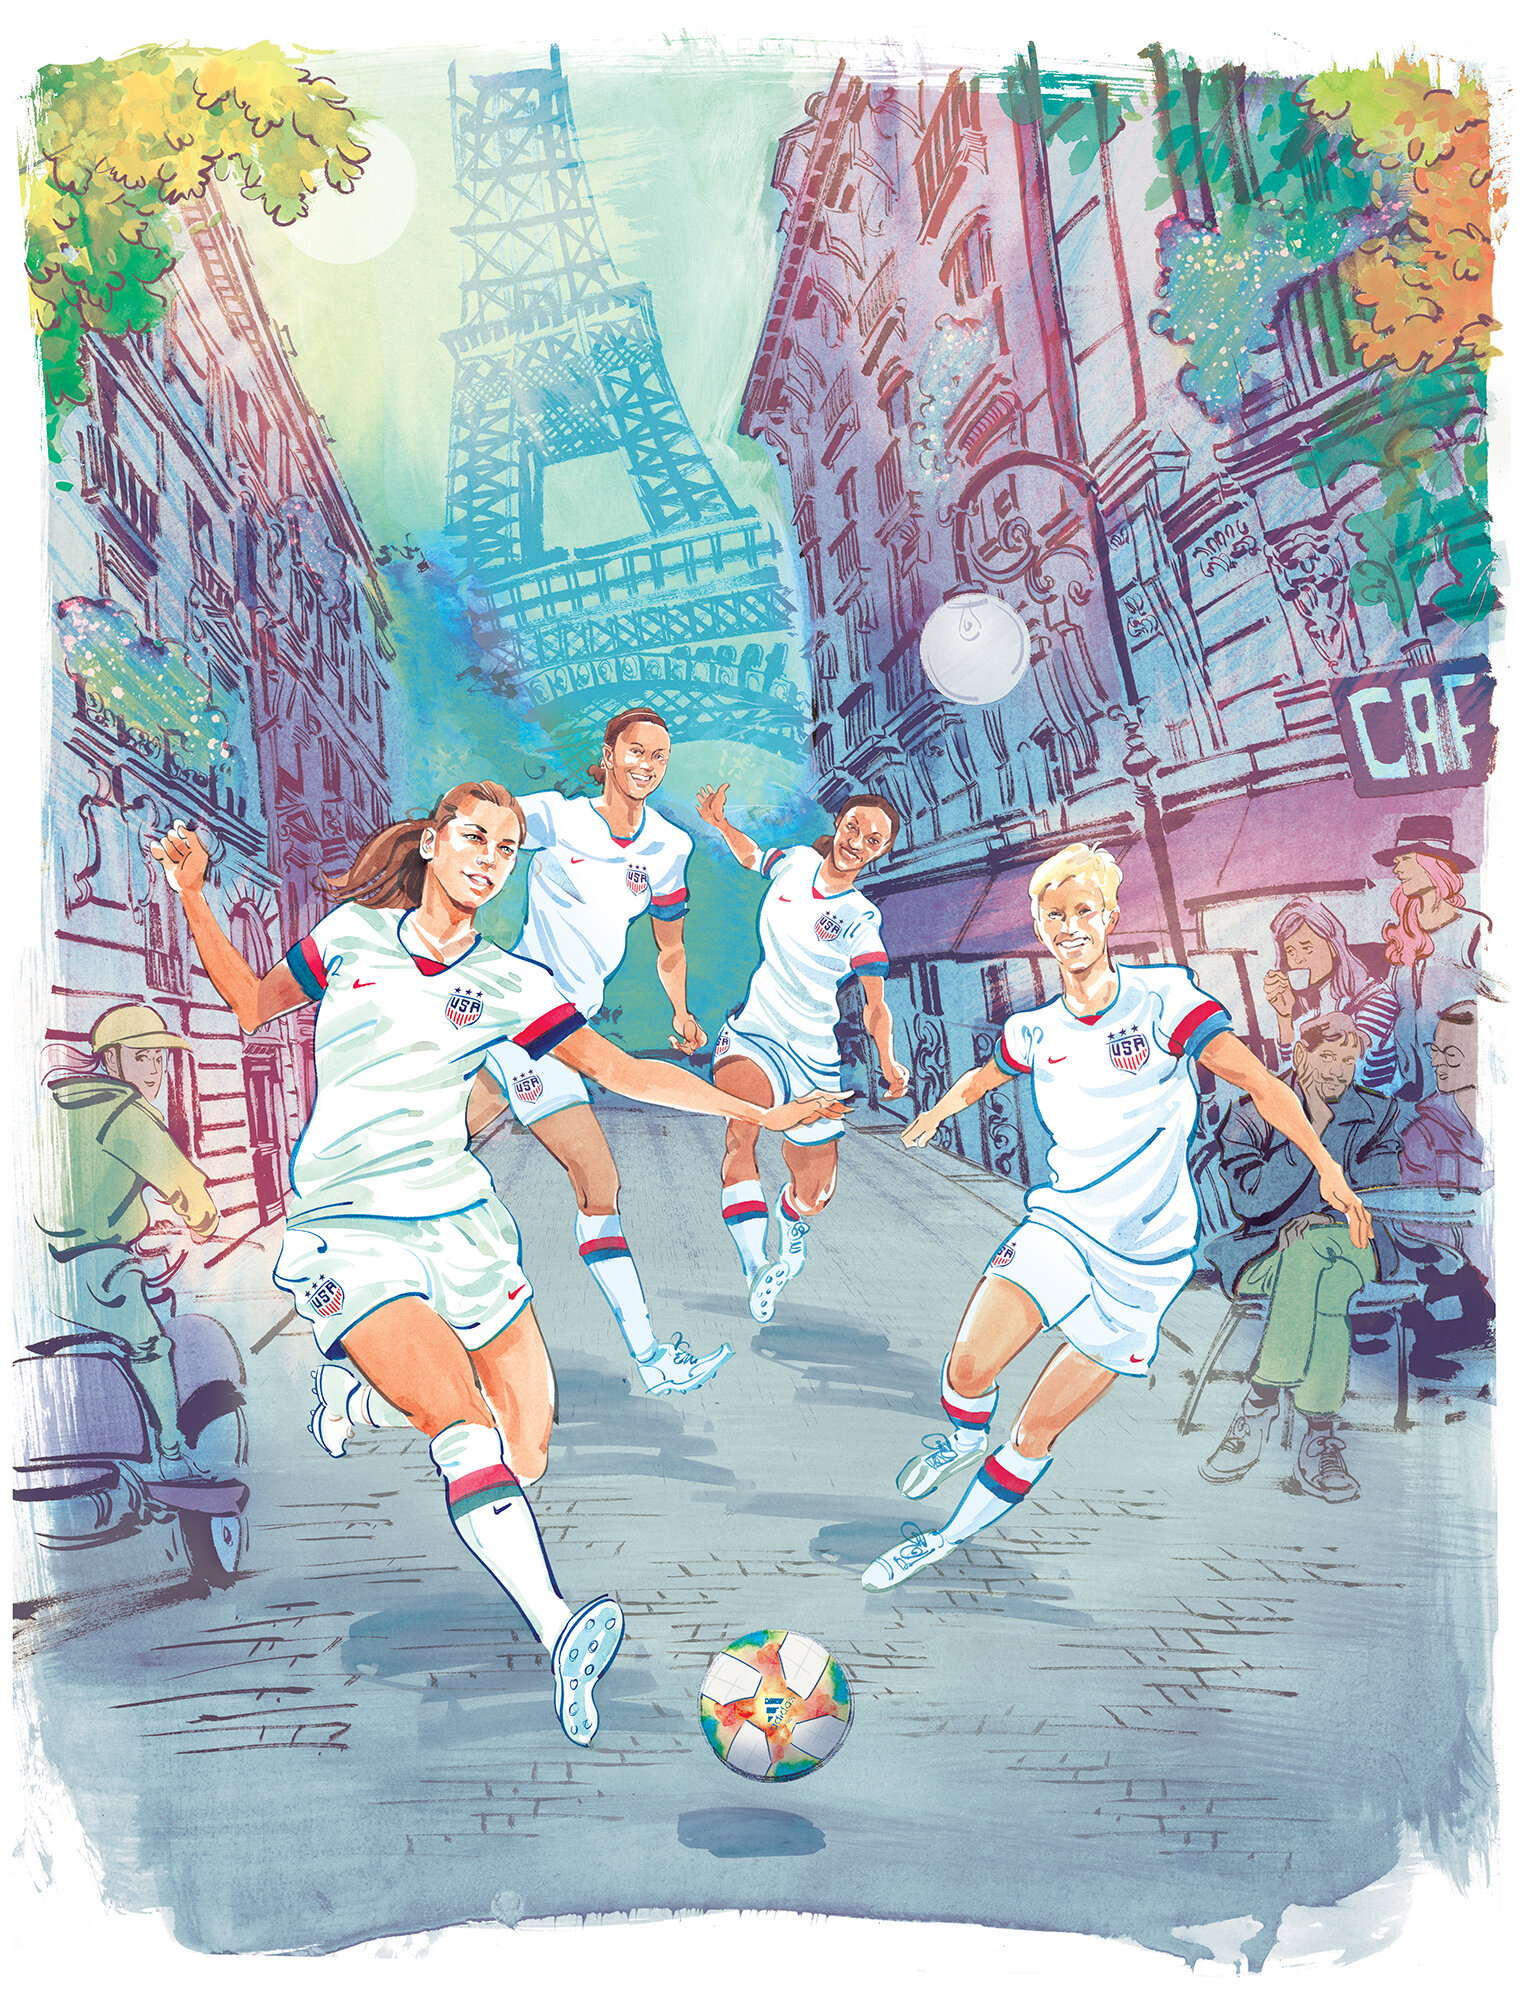 Women's Soccer / Sports Illustrated Kids